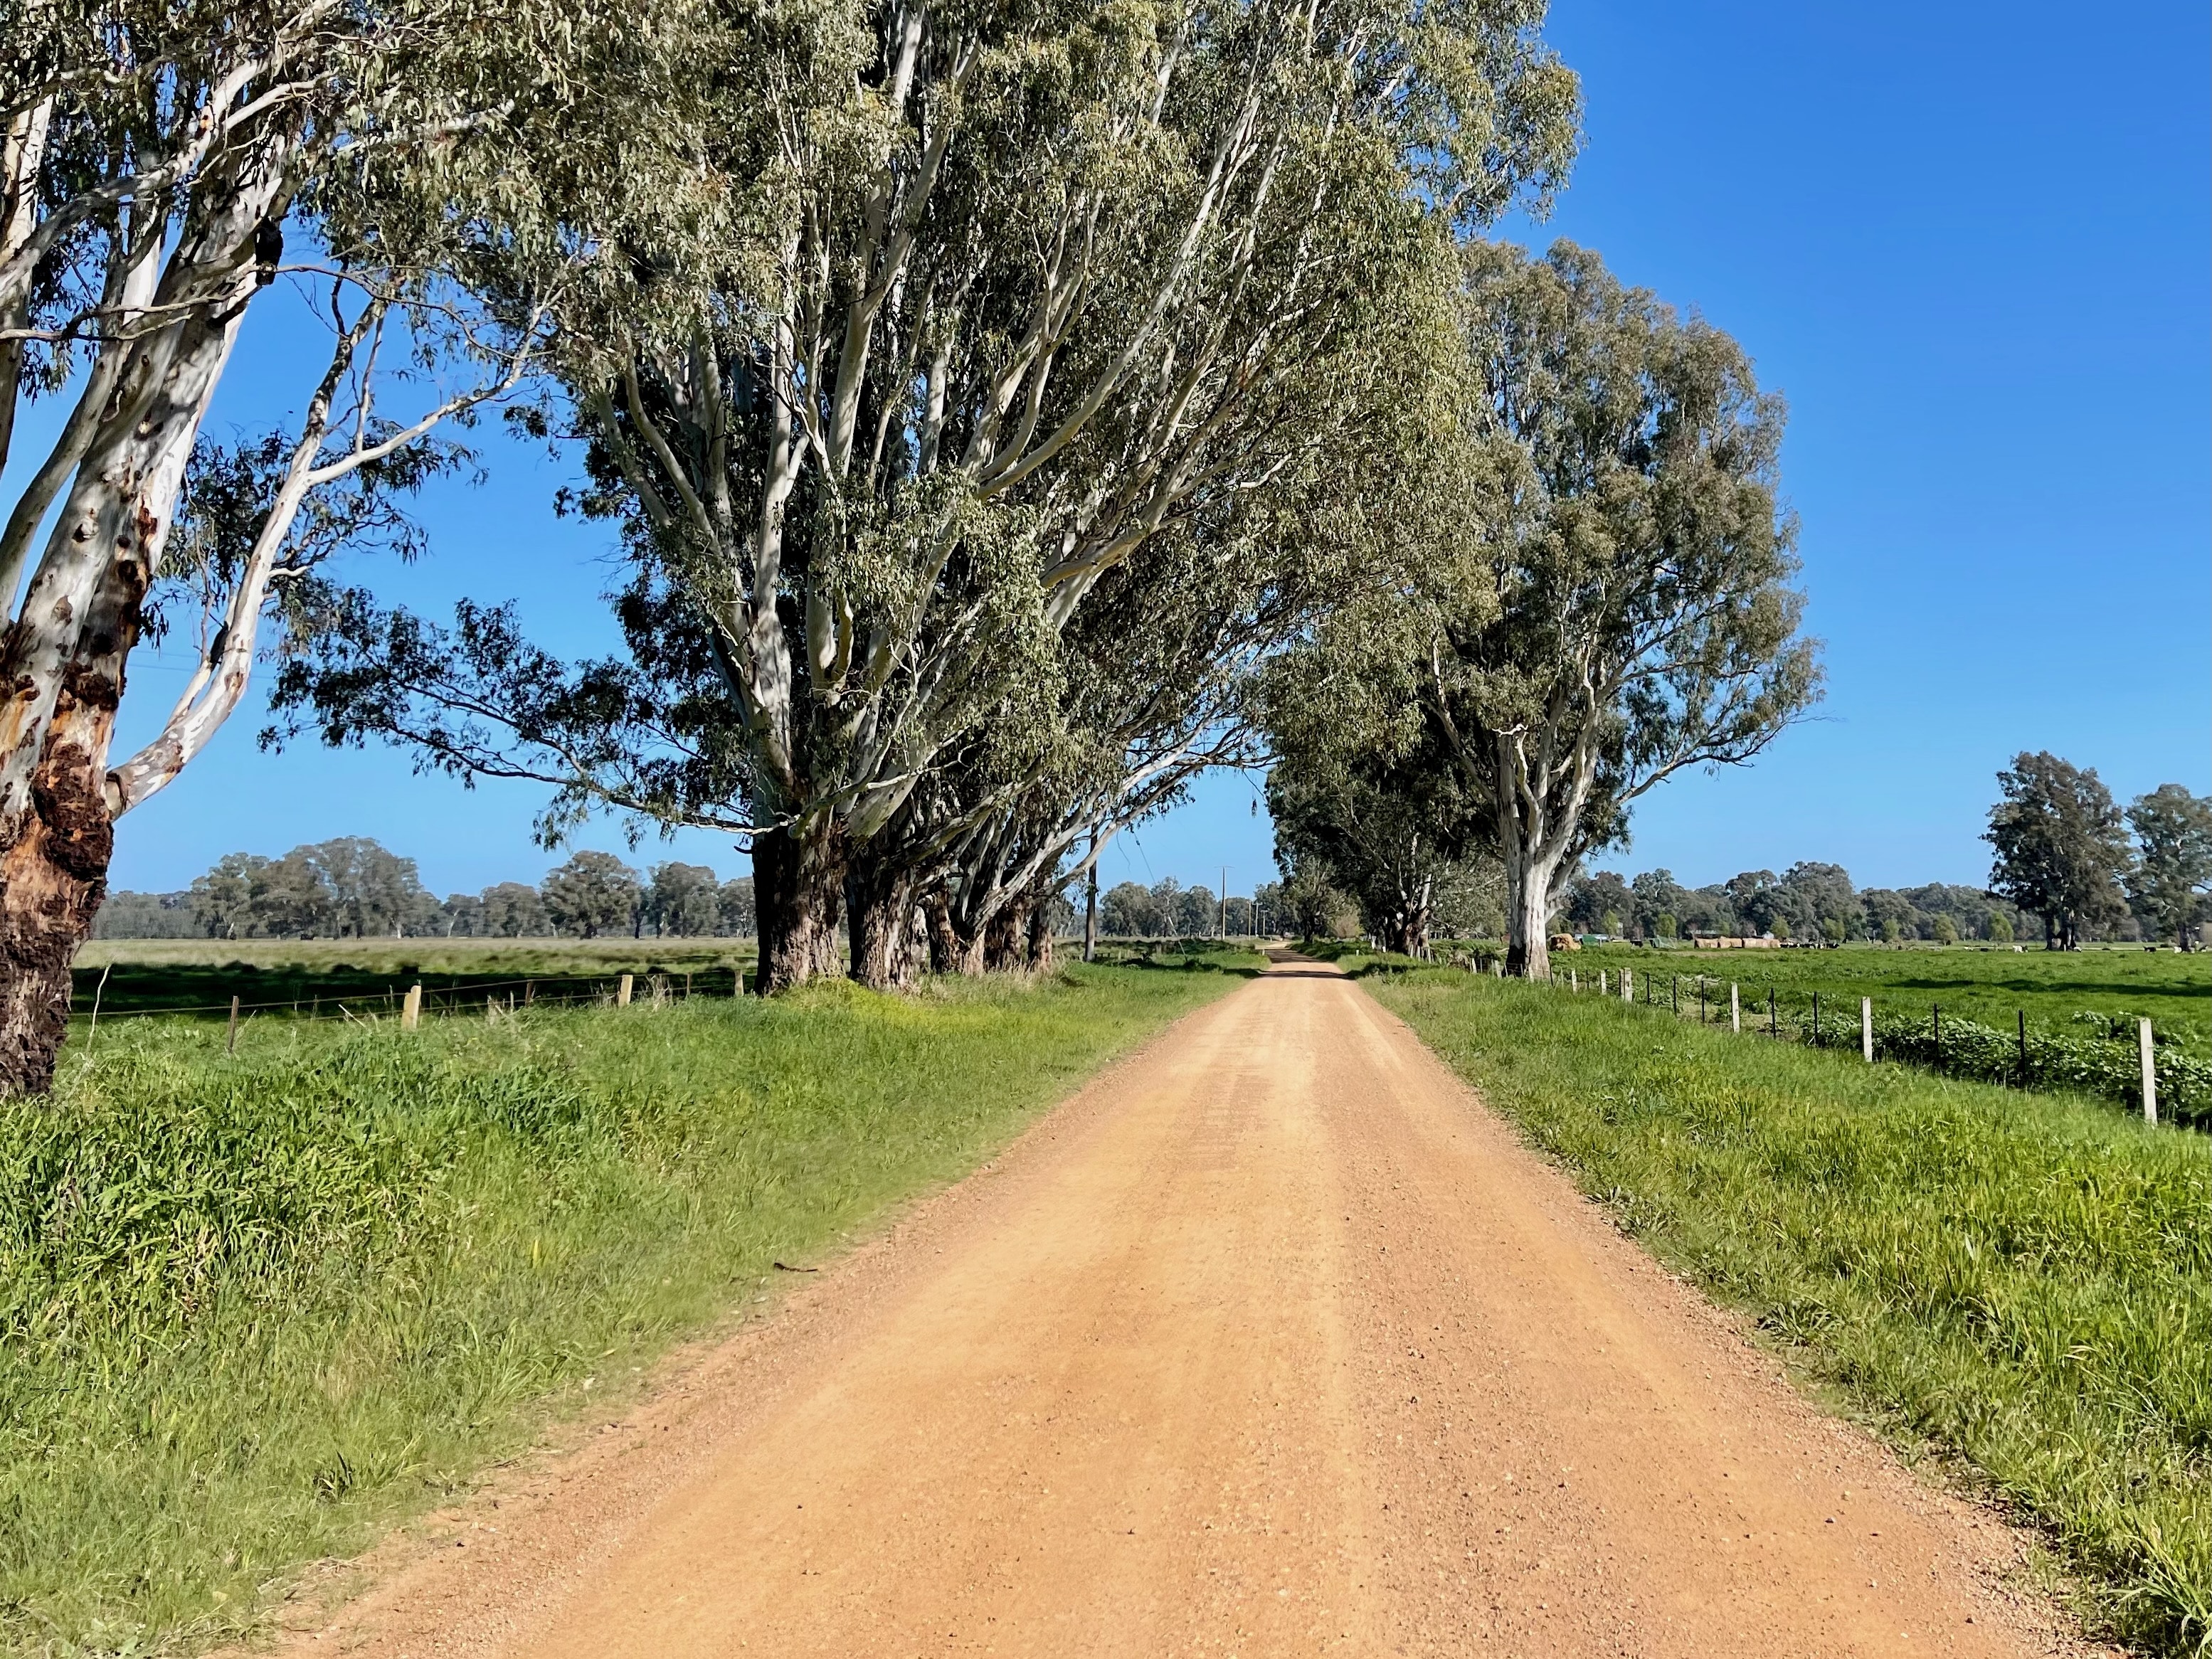 Quiet smooth gravel road running through open farmland